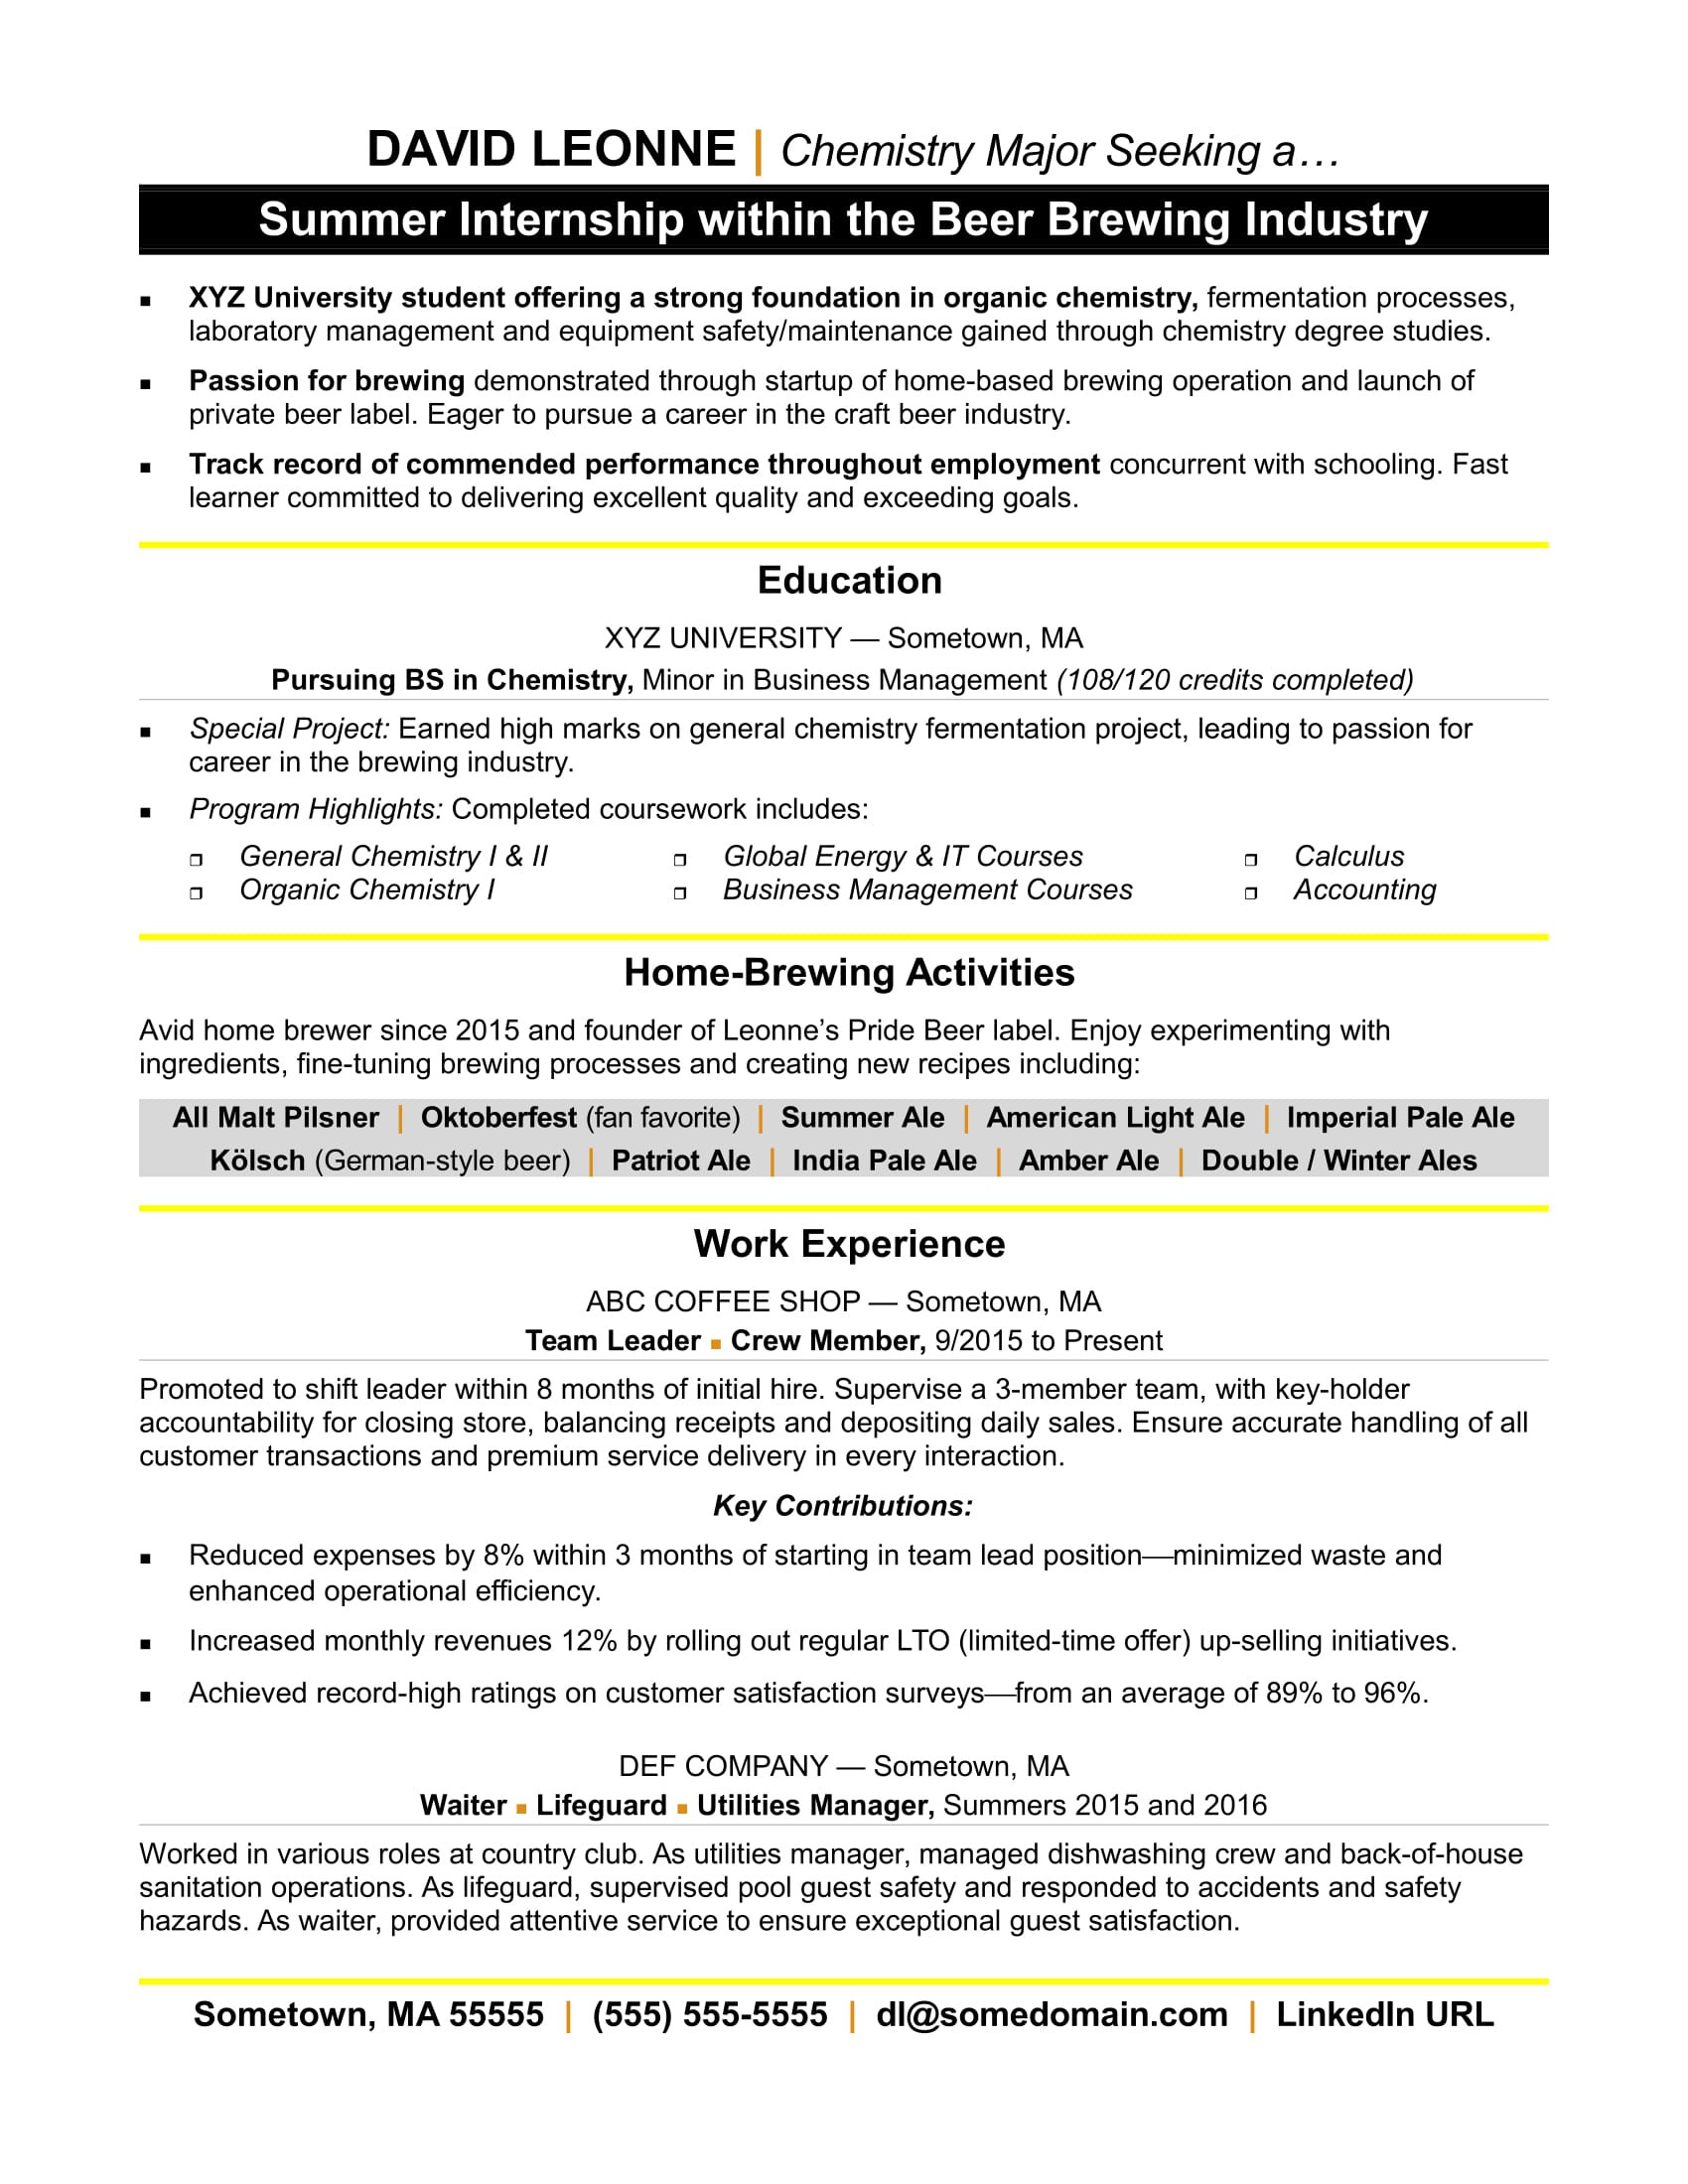 Resume Sample for College with Externship Site Information Resume for Internship Monster.com